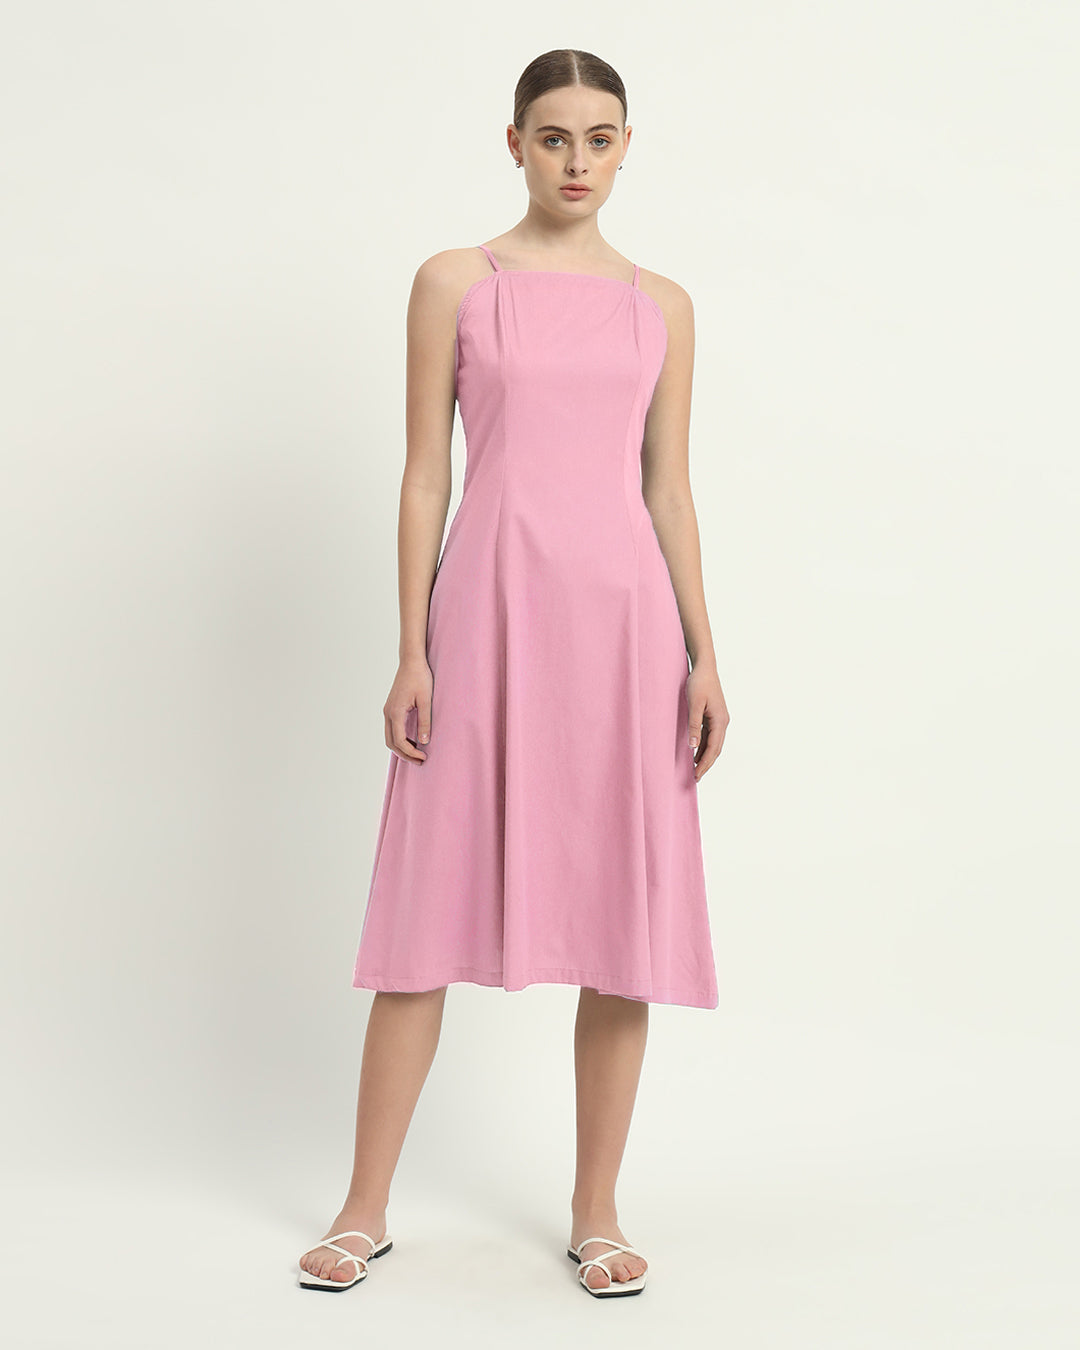 The Valatie Fondant Pink Cotton Dress